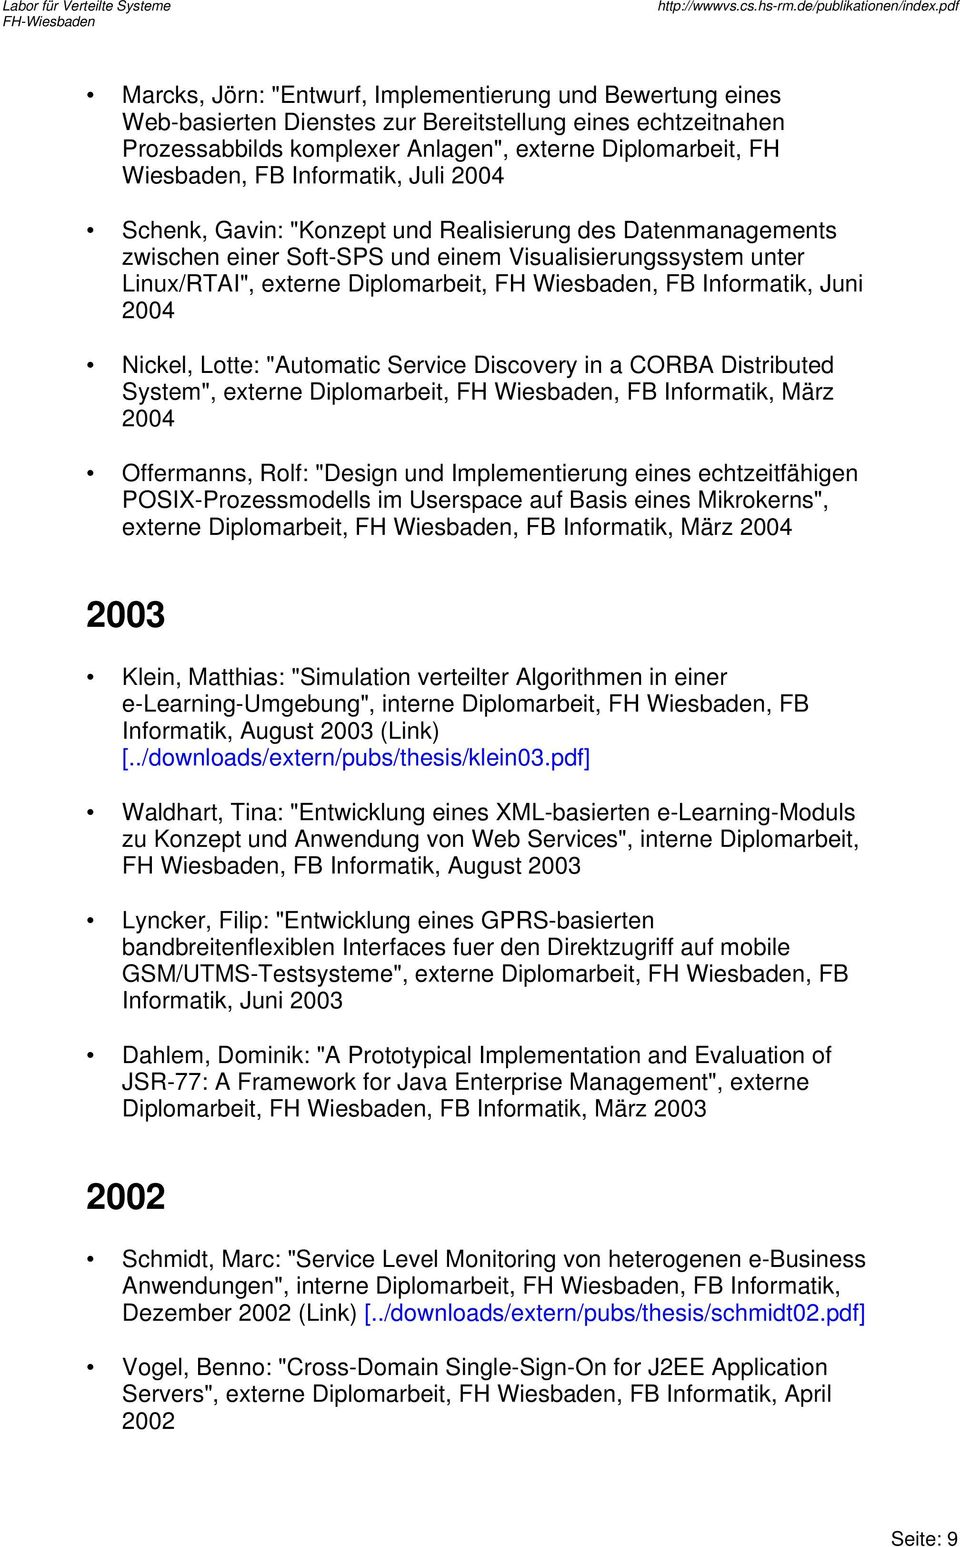 Informatik, Juni 2004 Nickel, Lotte: "Automatic Service Discovery in a CORBA Distributed System", externe Diplomarbeit, FH Wiesbaden, FB Informatik, März 2004 Offermanns, Rolf: "Design und